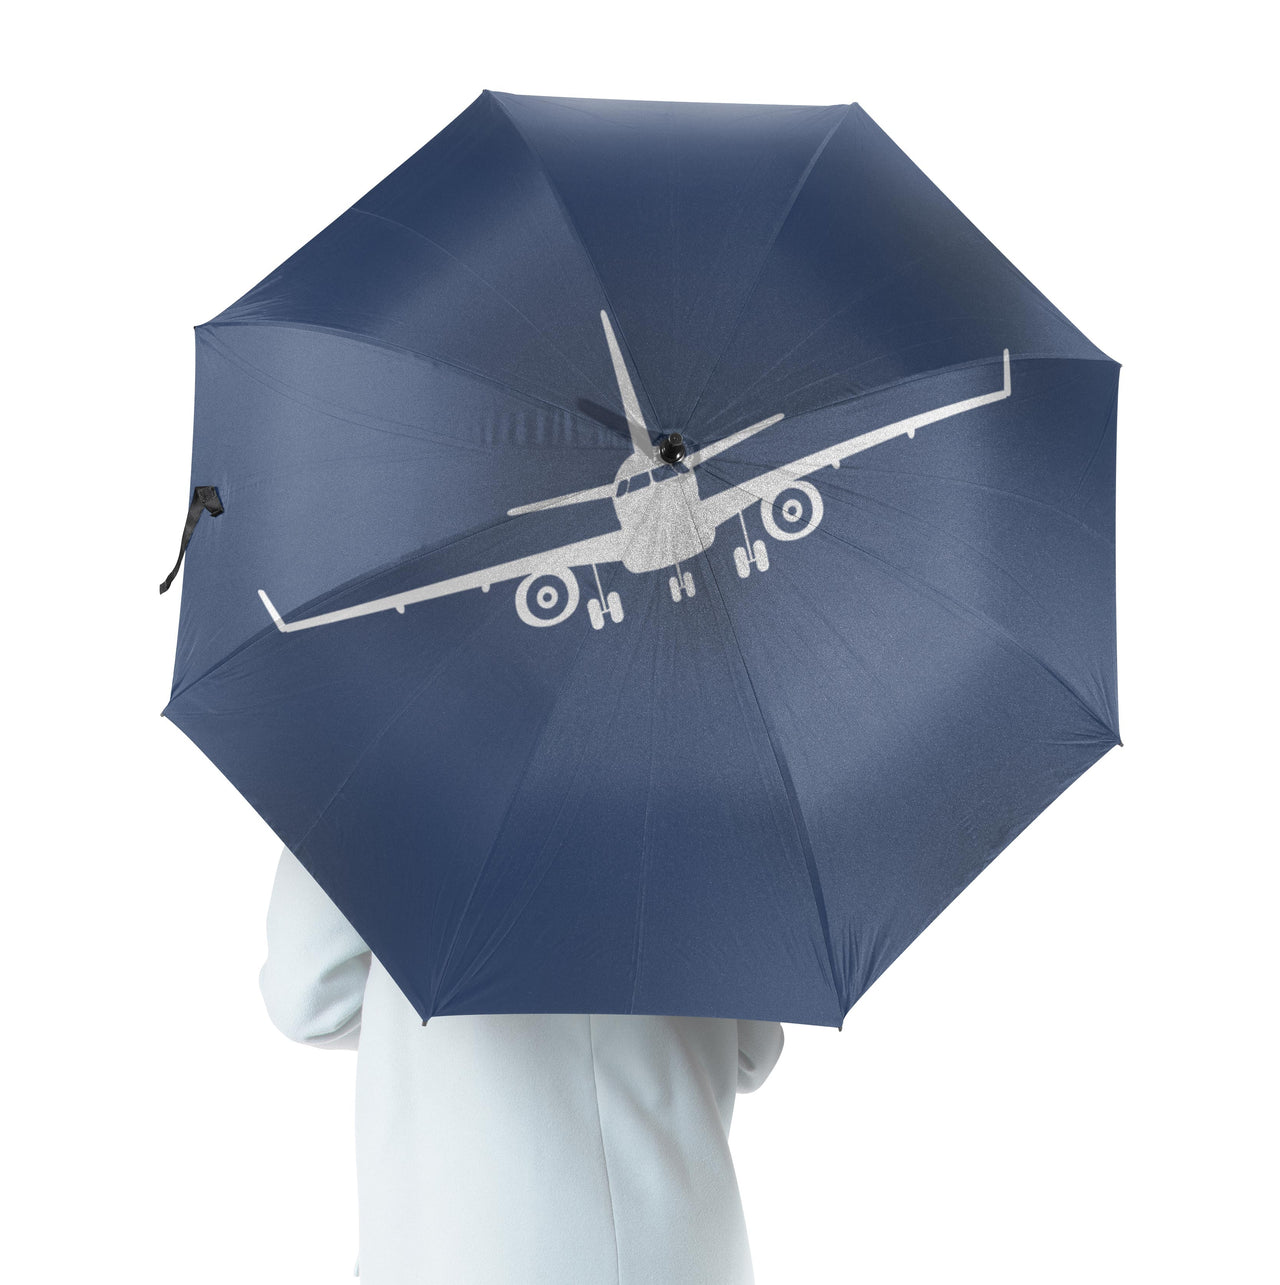 Embraer E-190 Silhouette Plane Designed Umbrella